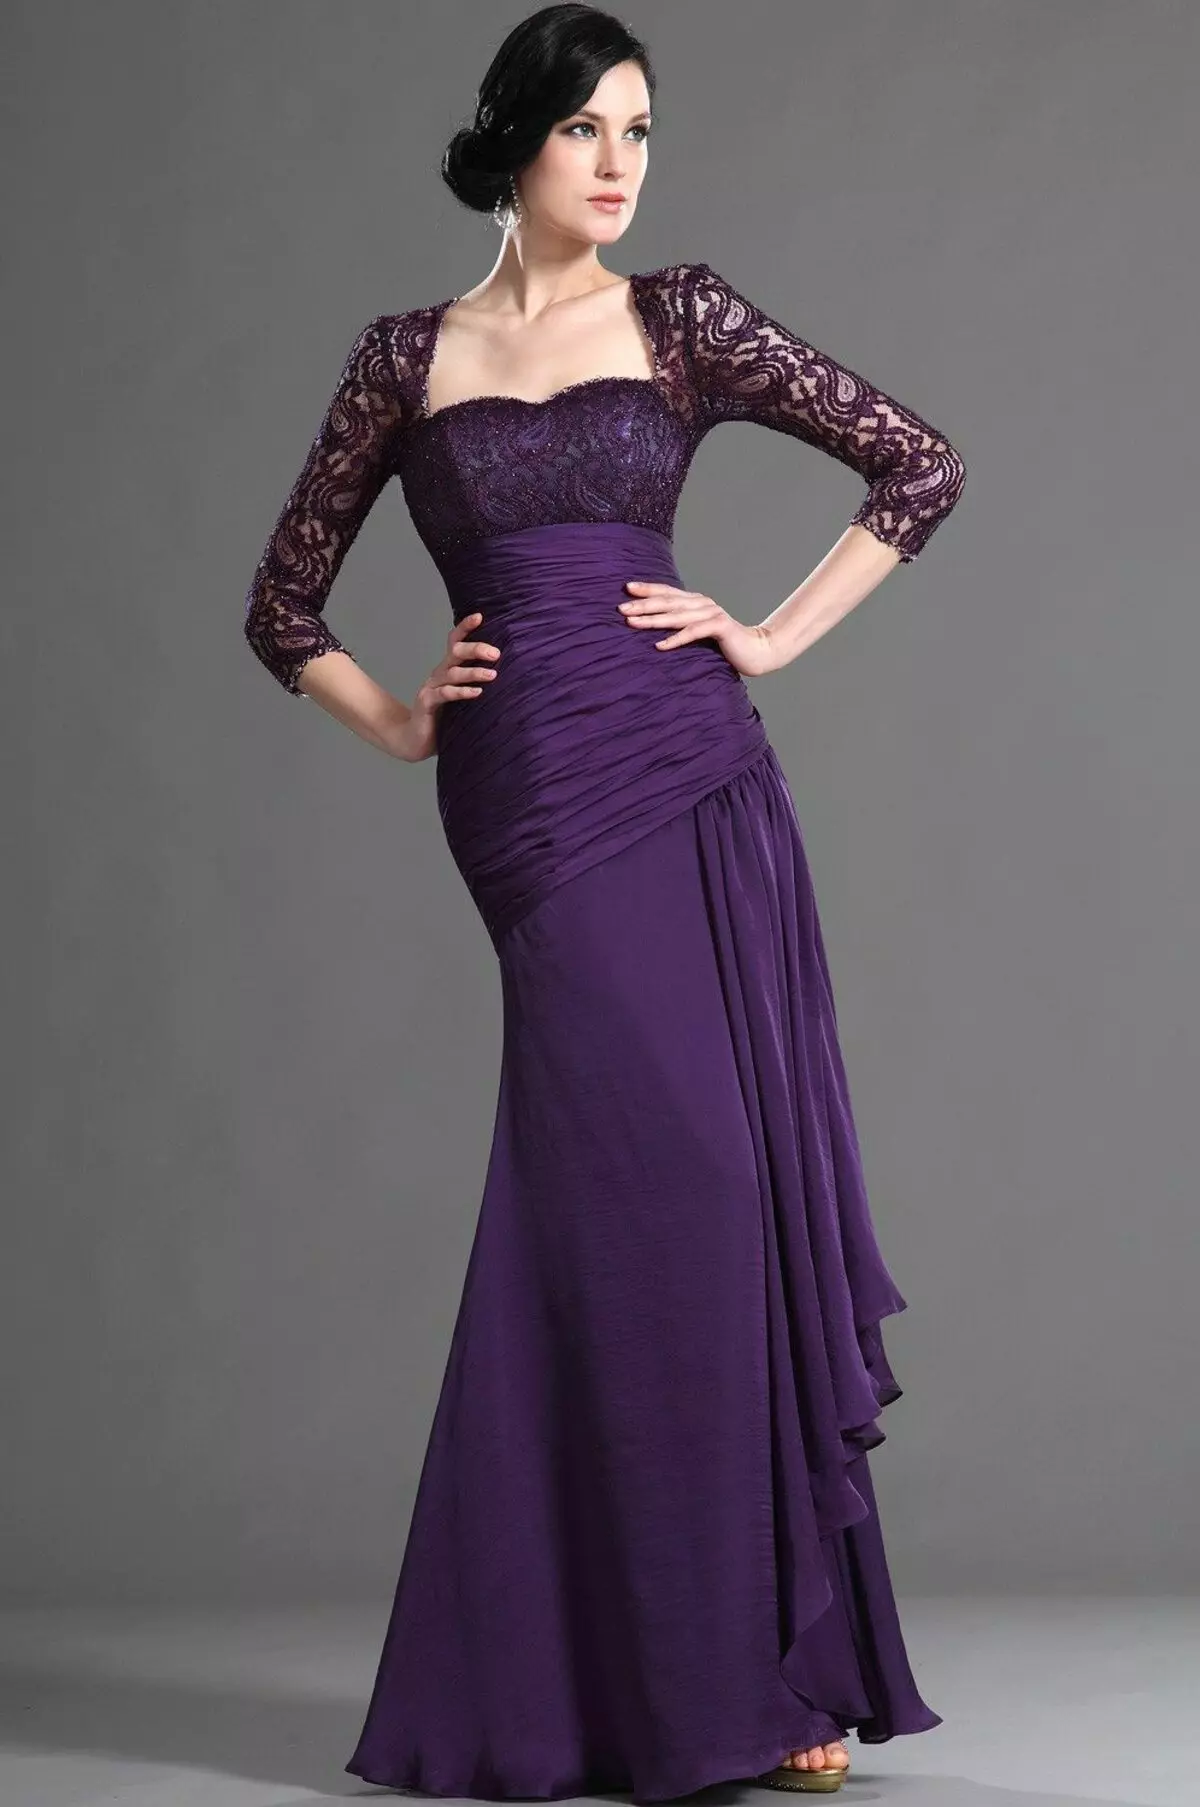 Dark Violet Evening Dress